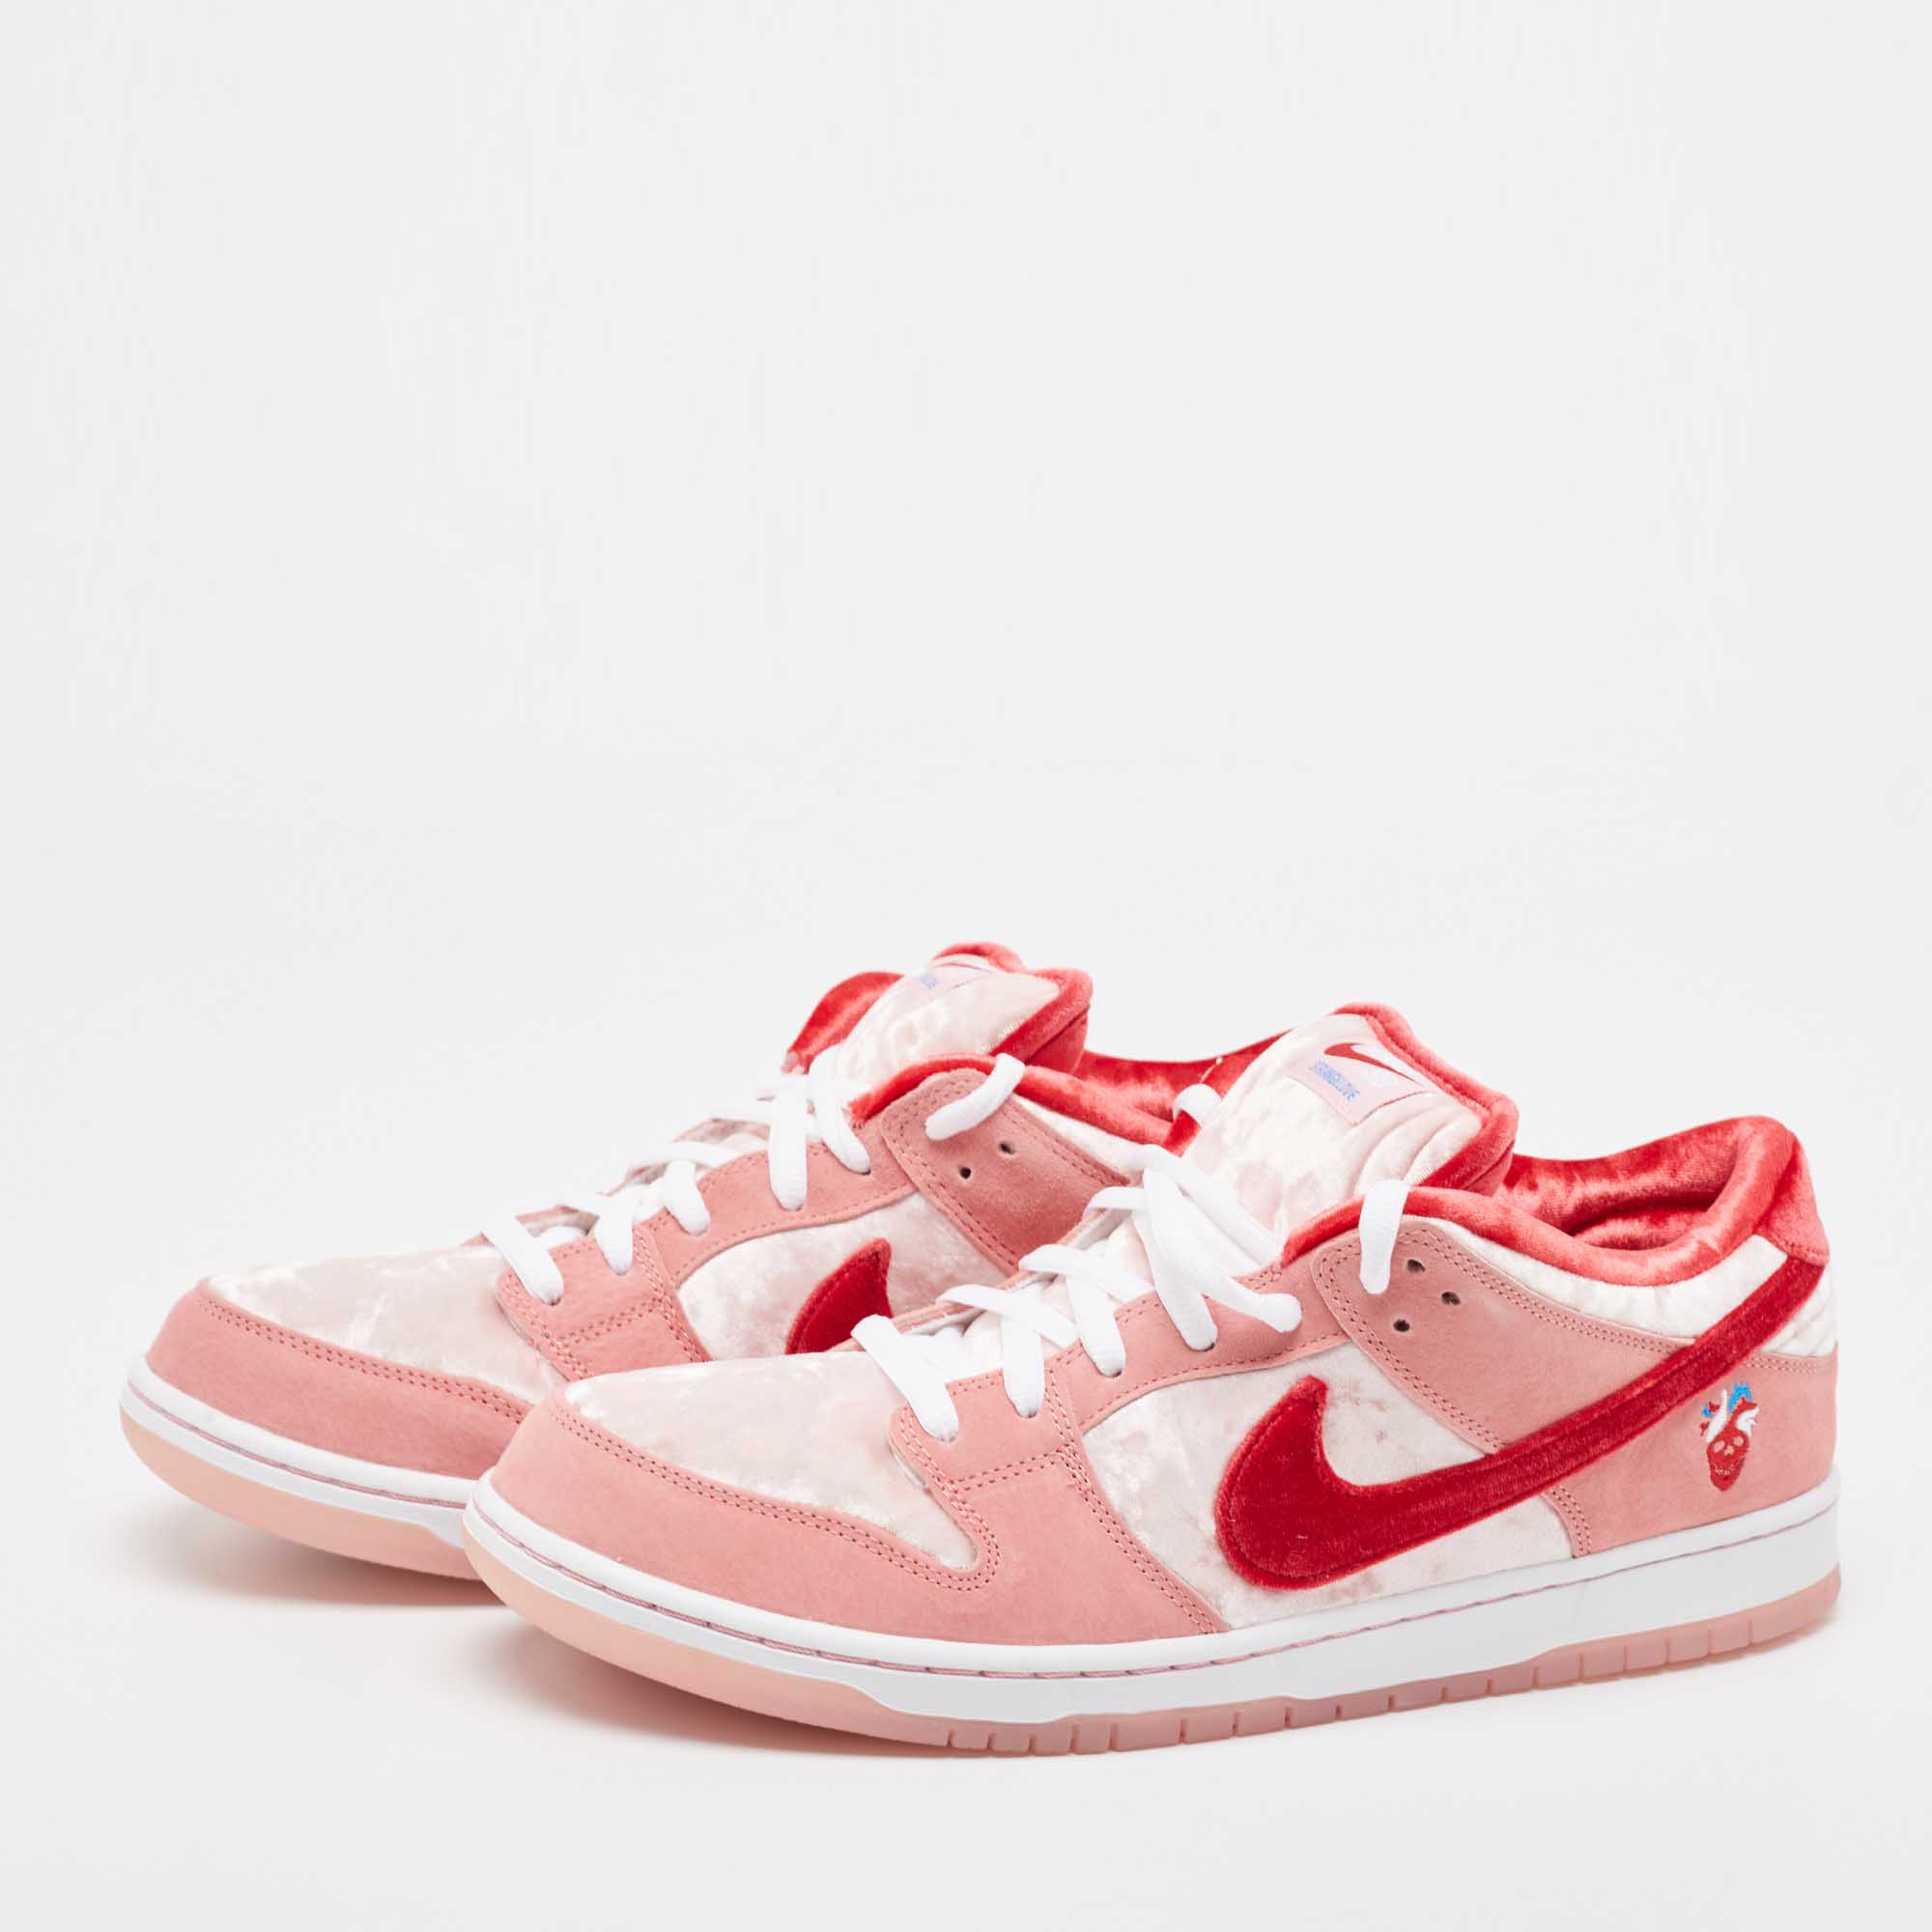 

Nike SB Dunk Pink Velvet Strangelove Low Top Sneakers Size